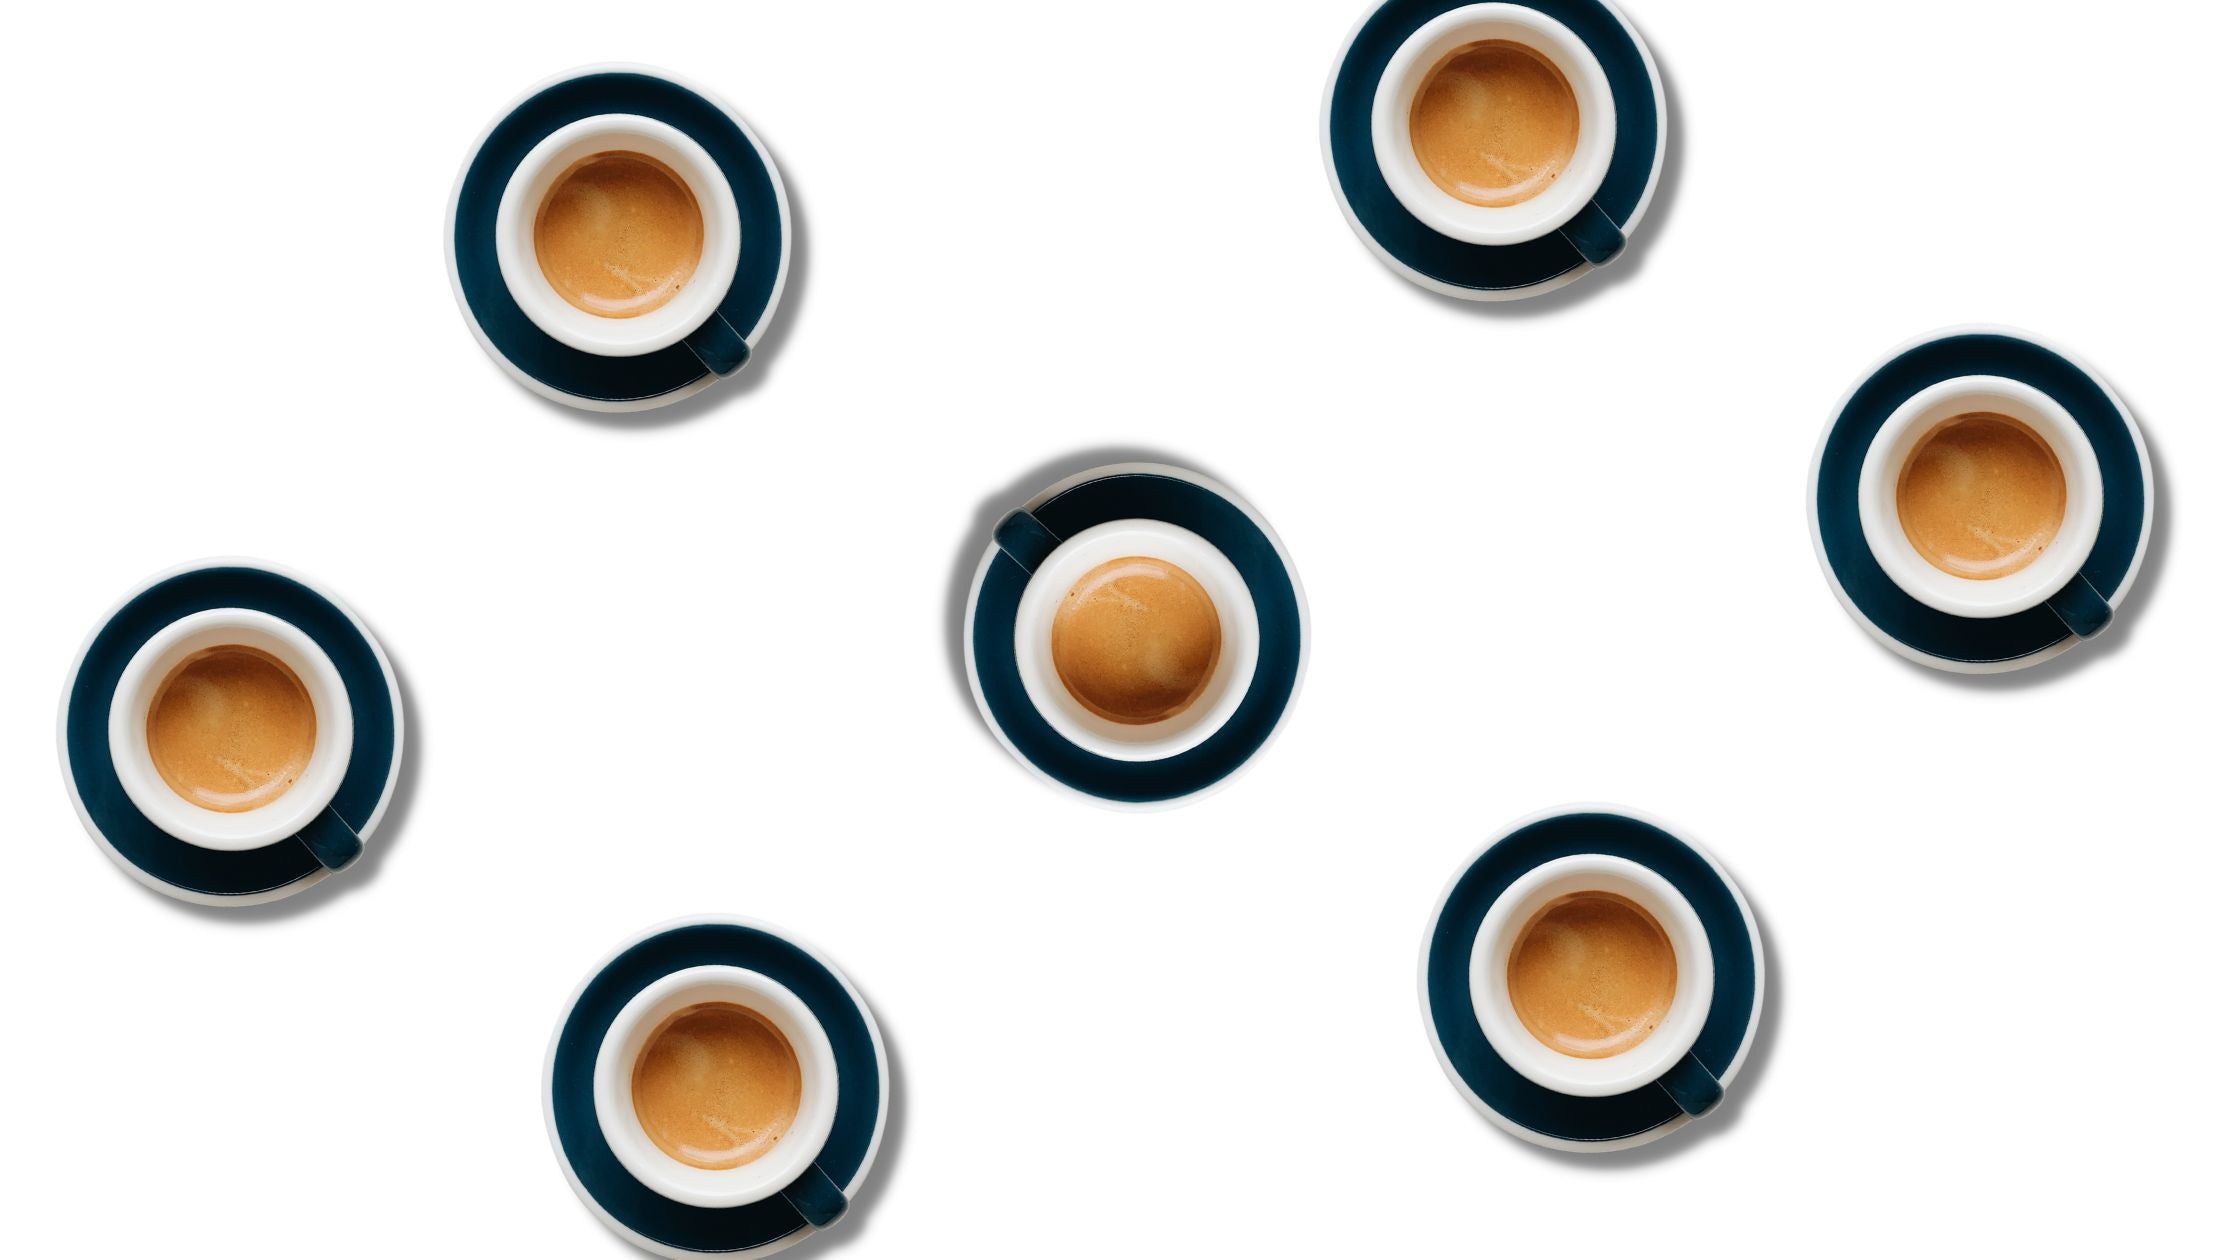 Gehoorzaamheid Knooppunt Prominent The 5 Best Espresso Cups For Coffee Shops In 2022